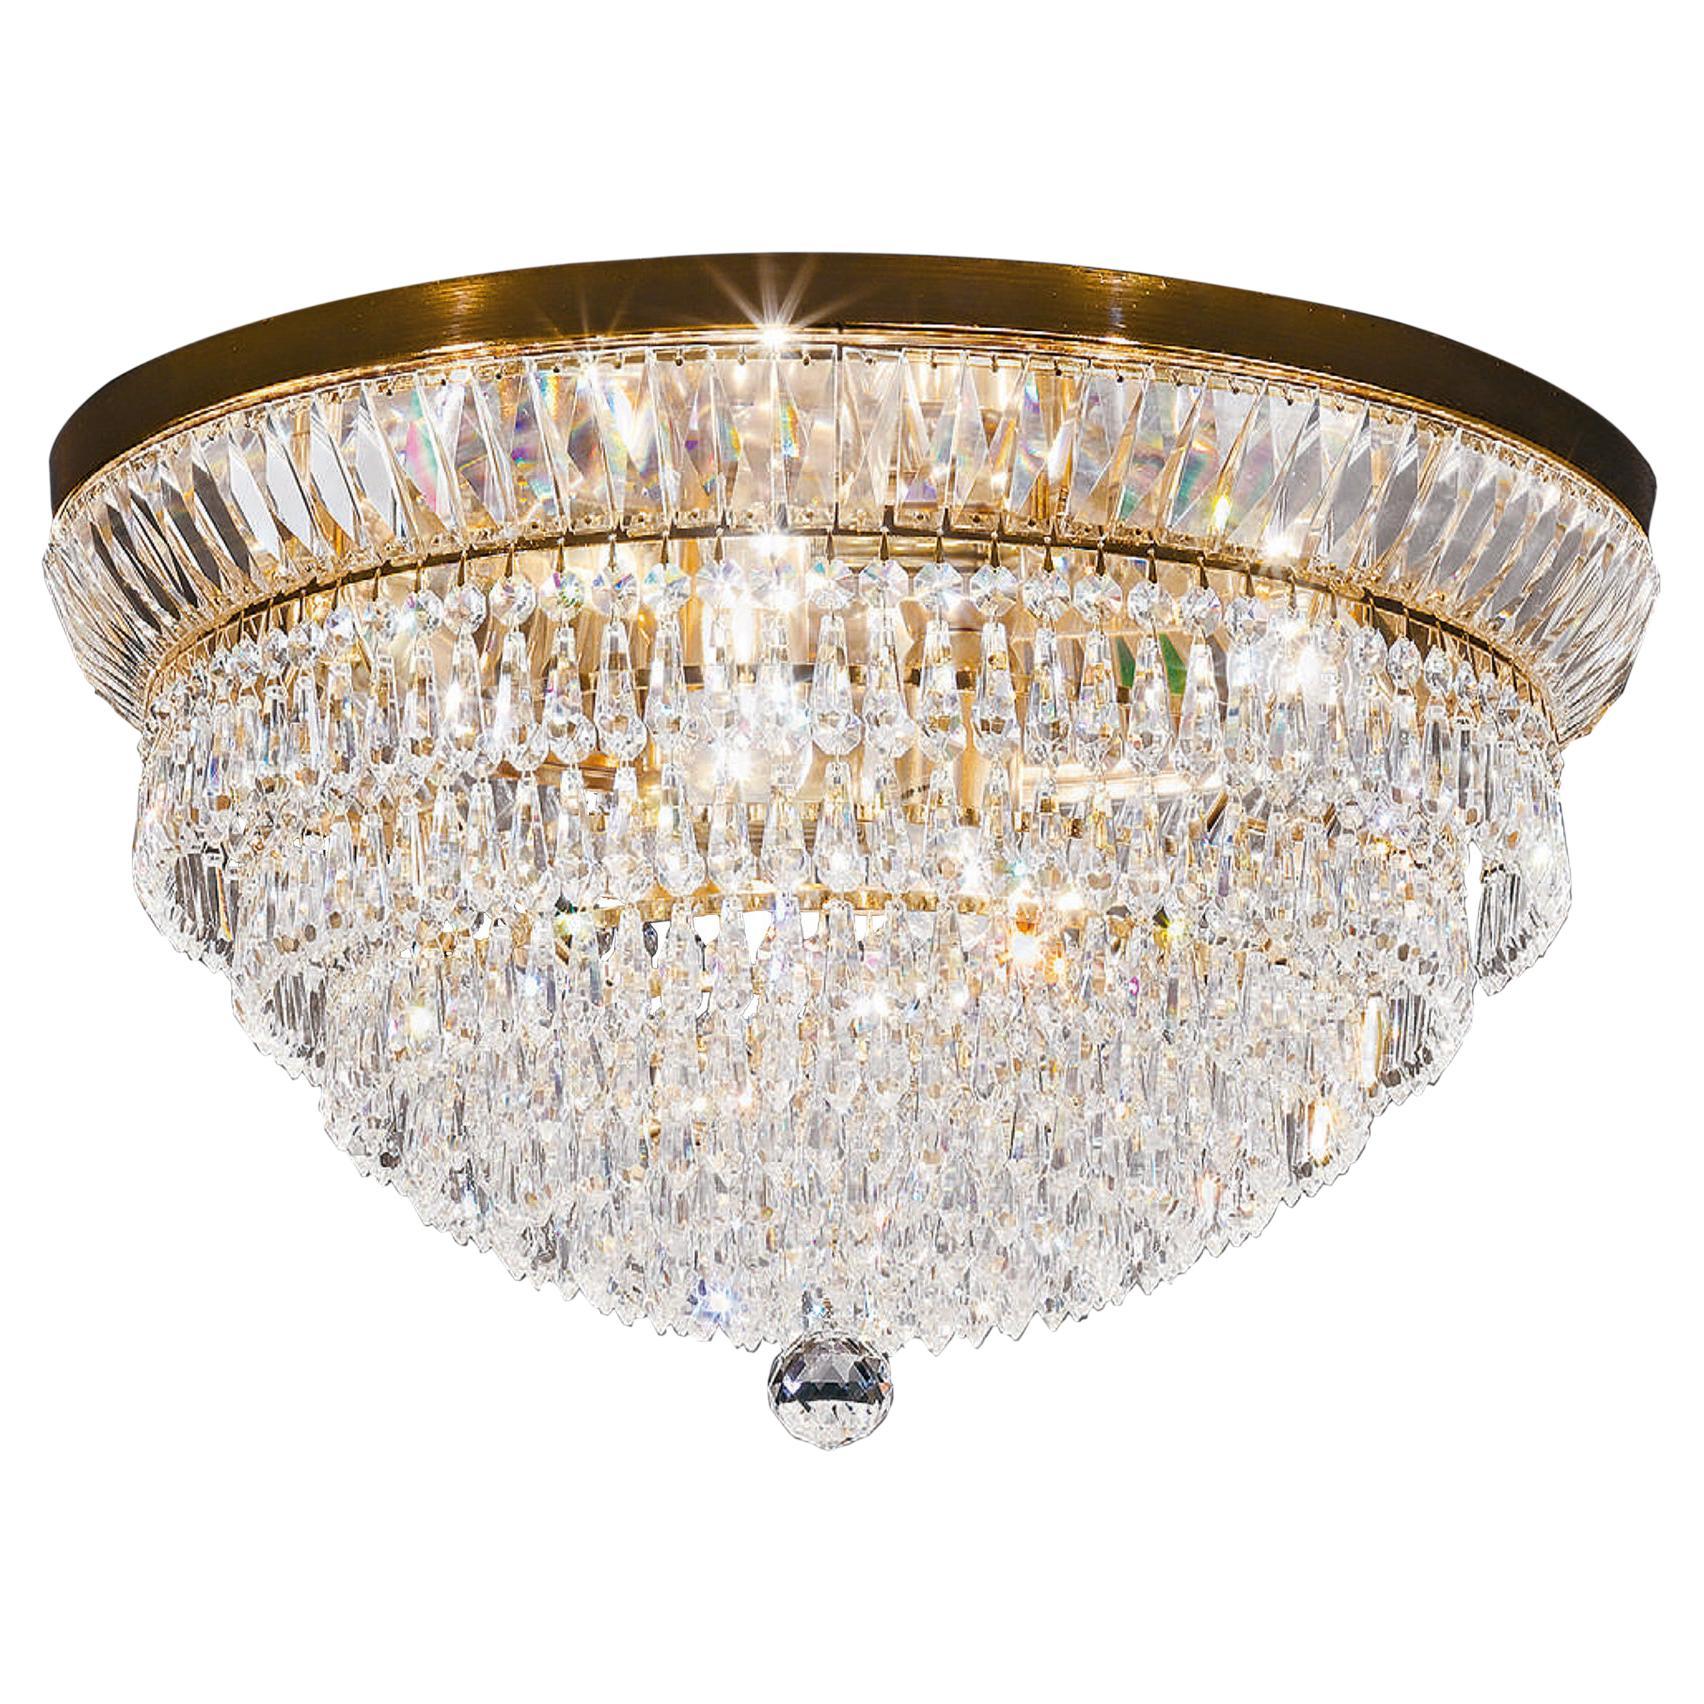 Glamorous 8-Lights Ceiling Lamp in 24kt Gold Finishing & Scholer Crystal Pendant For Sale